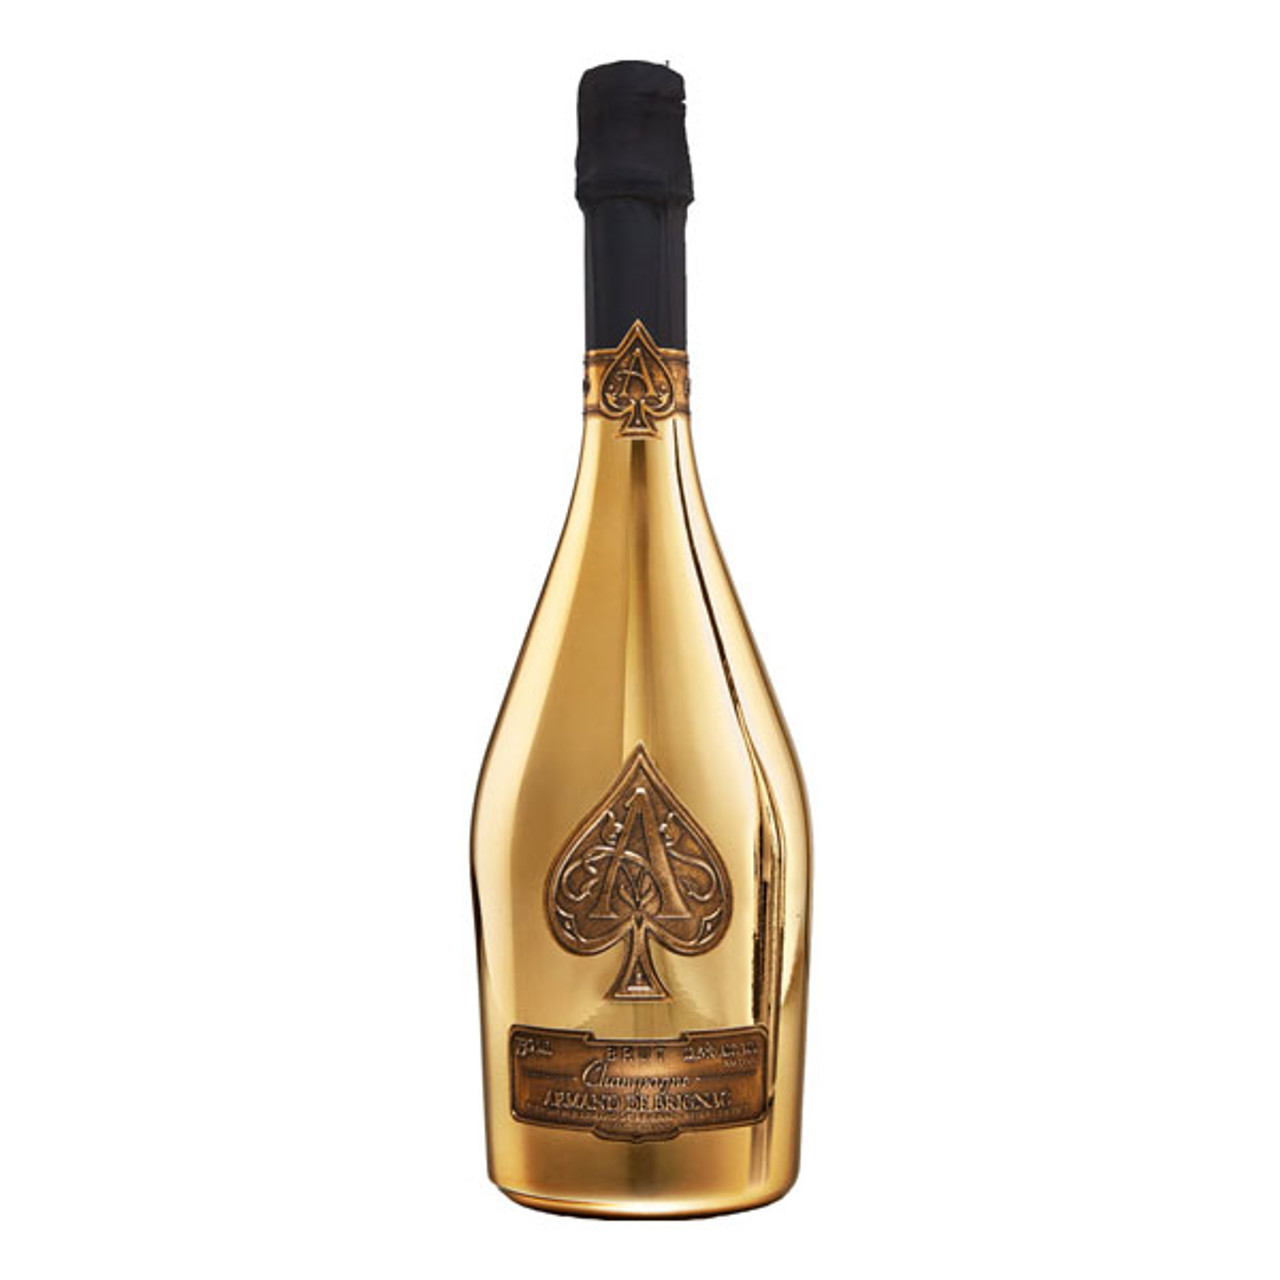 NV Armand de Brignac Ace of Spades Brut Gold Green Bottle [Future Arrival]  - The Wine Cellarage